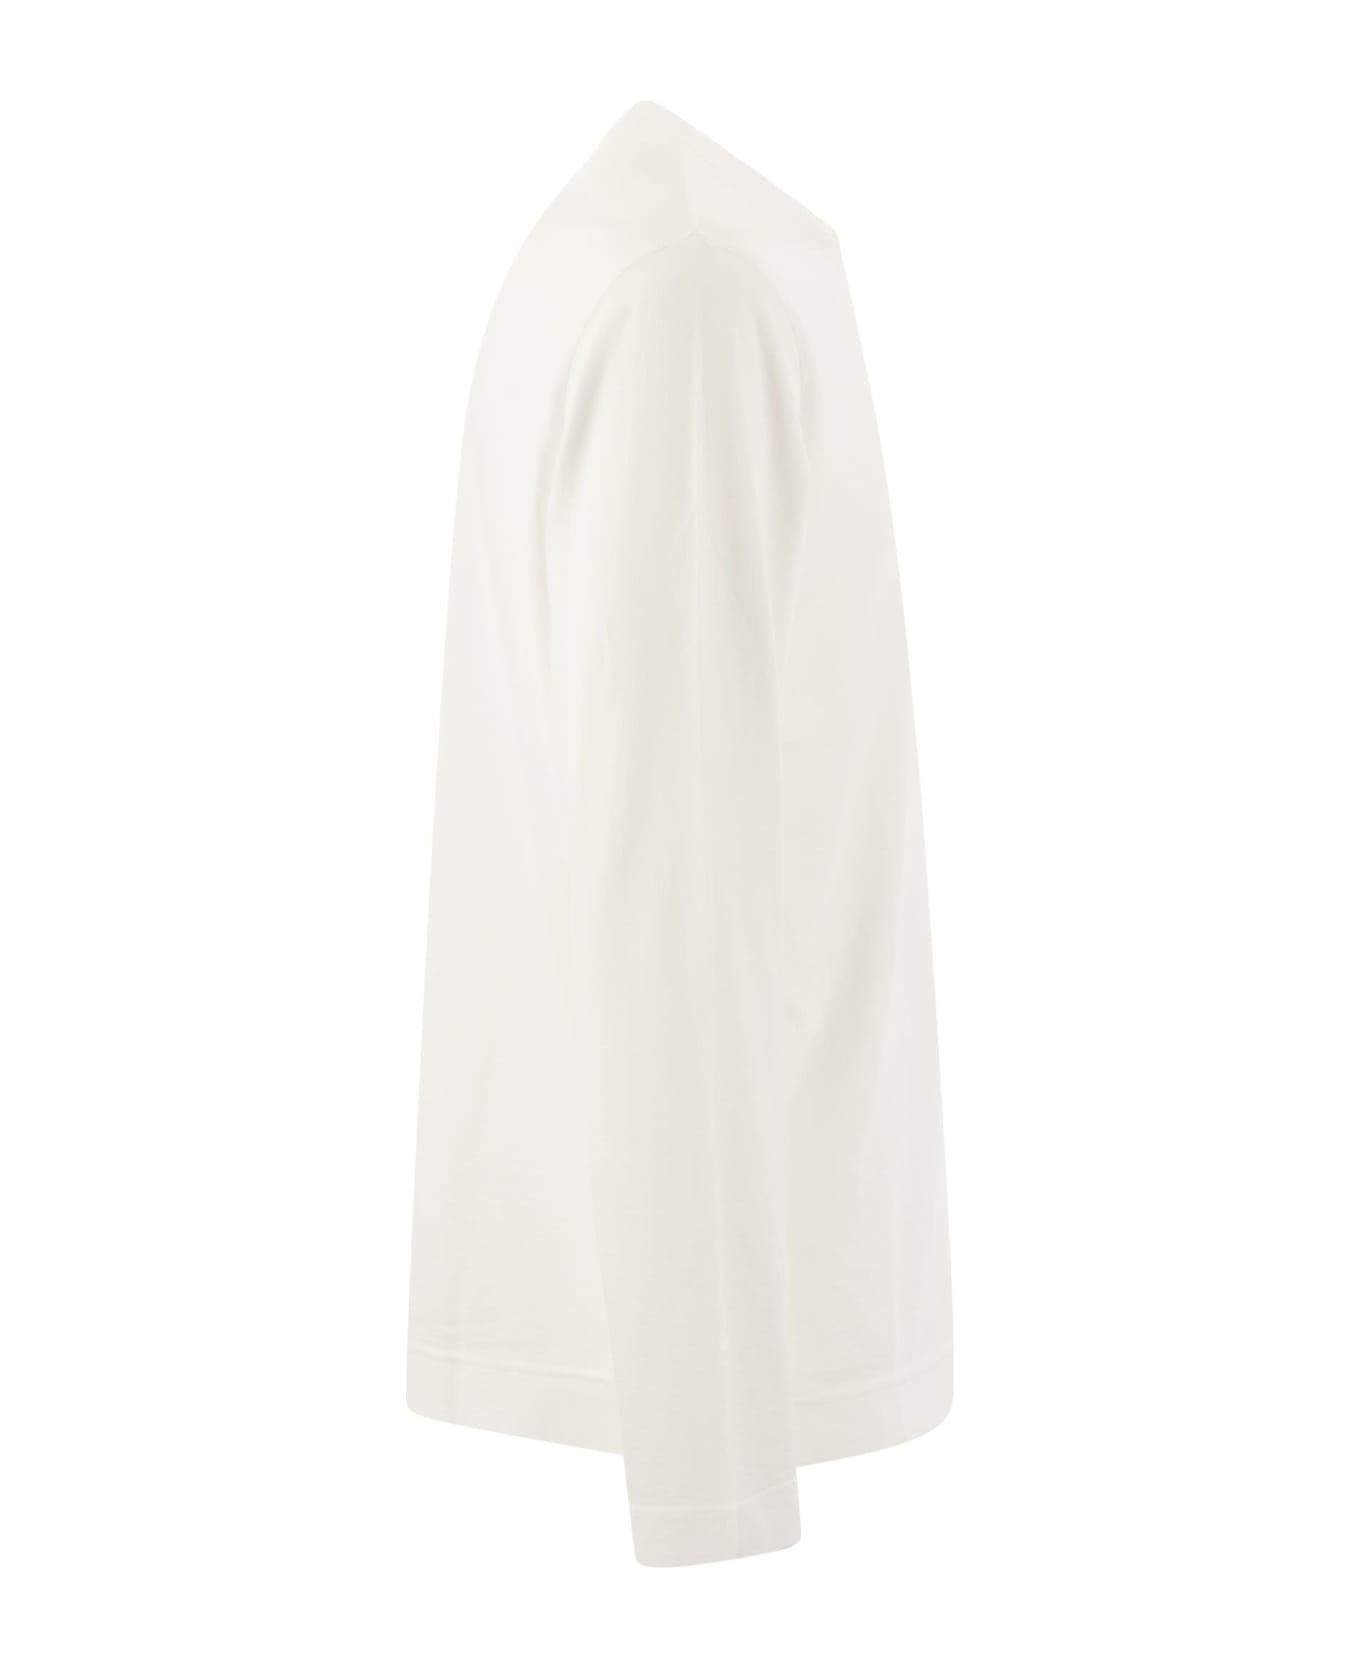 Fedeli Long-sleeved Cotton T-shirt - White シャツ